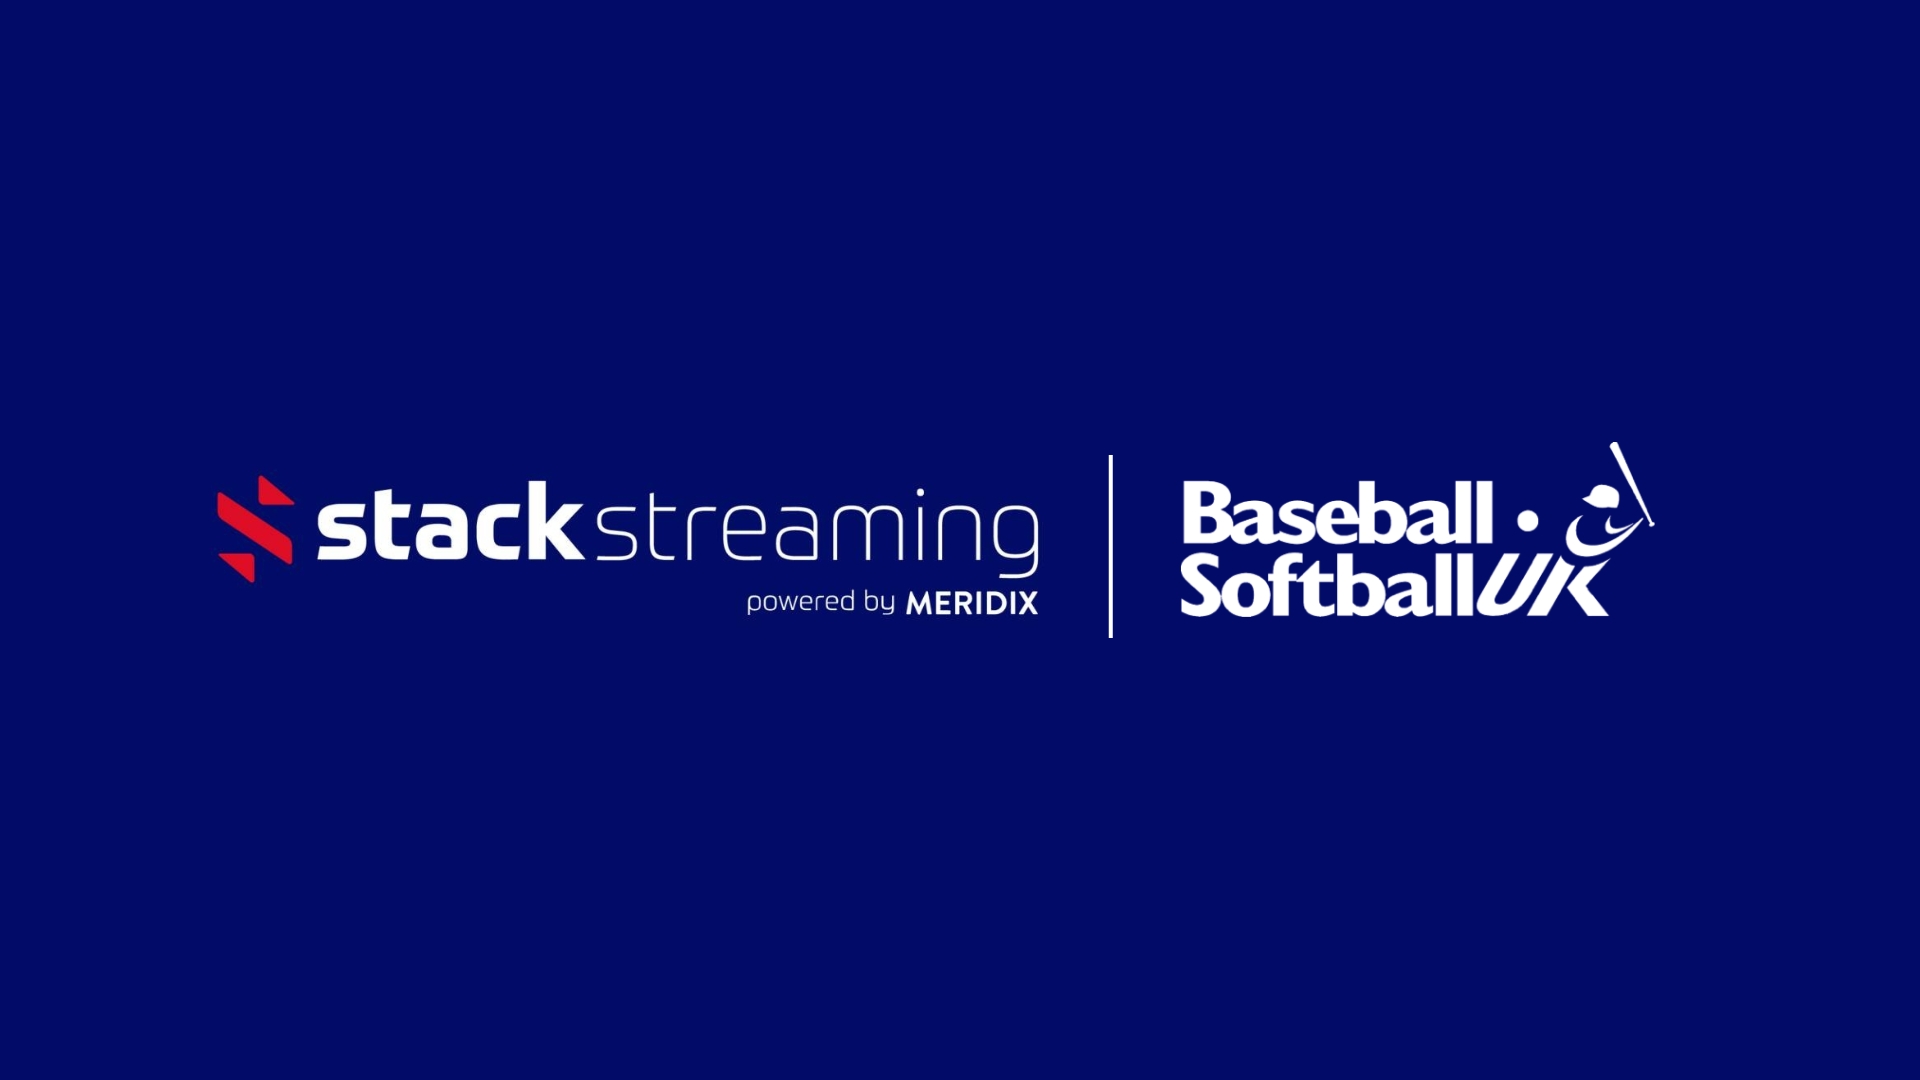 Baseball Softball UK making use of GameDays product ecosystem to simplify live streaming